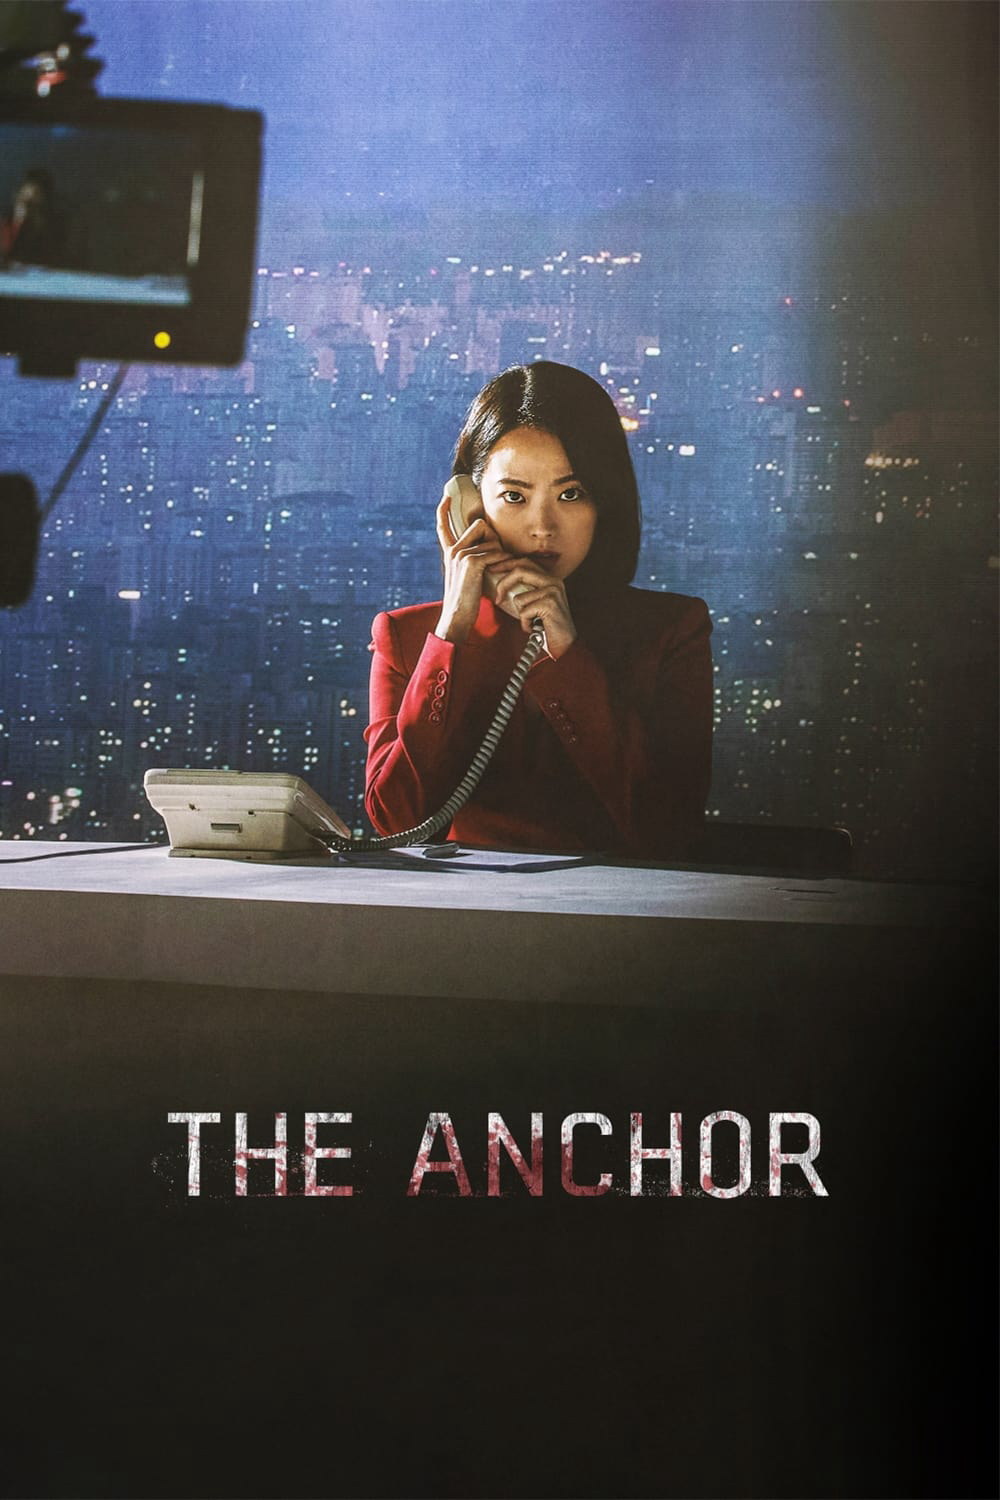 Poster Phim Bản Tin Chết (The Anchor)